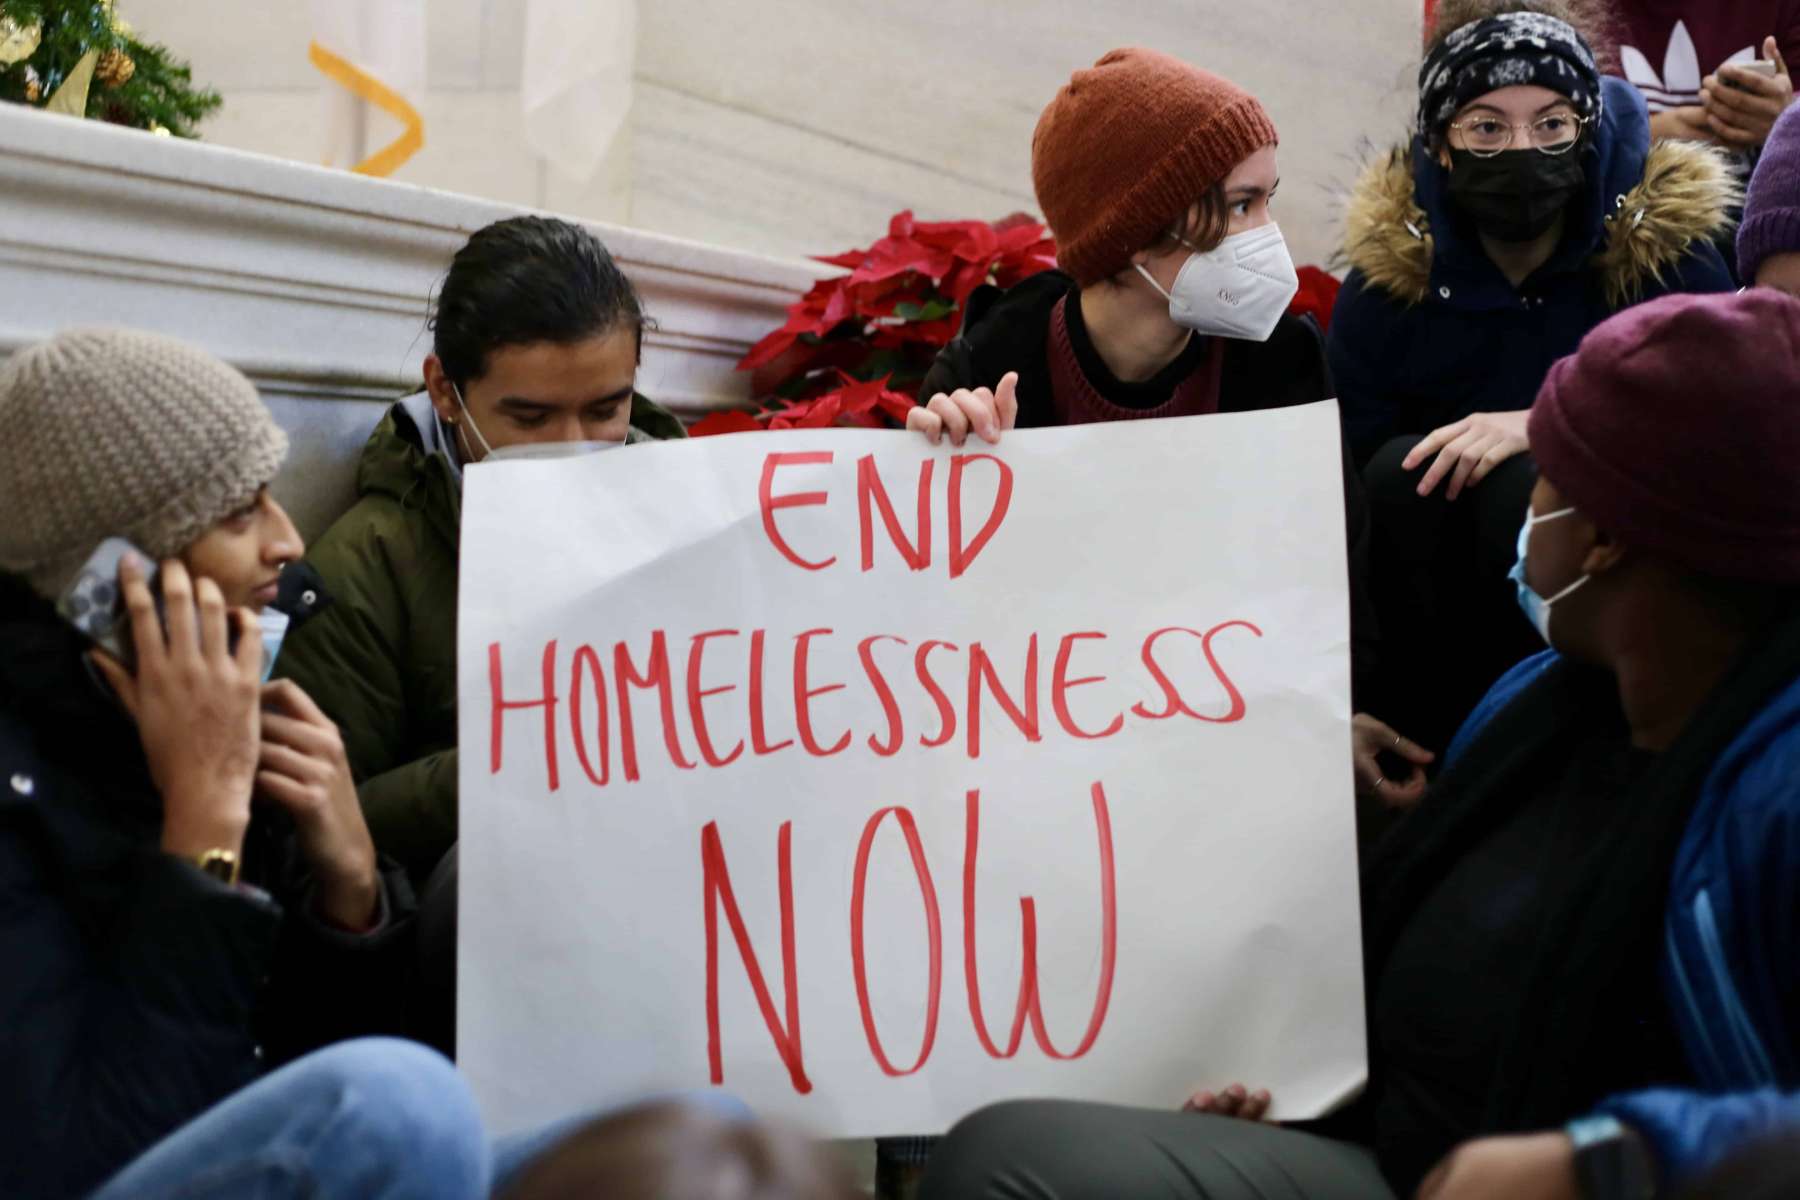 RI Housing Secretary Saal letter fails to grasp the reality of homeless encampments